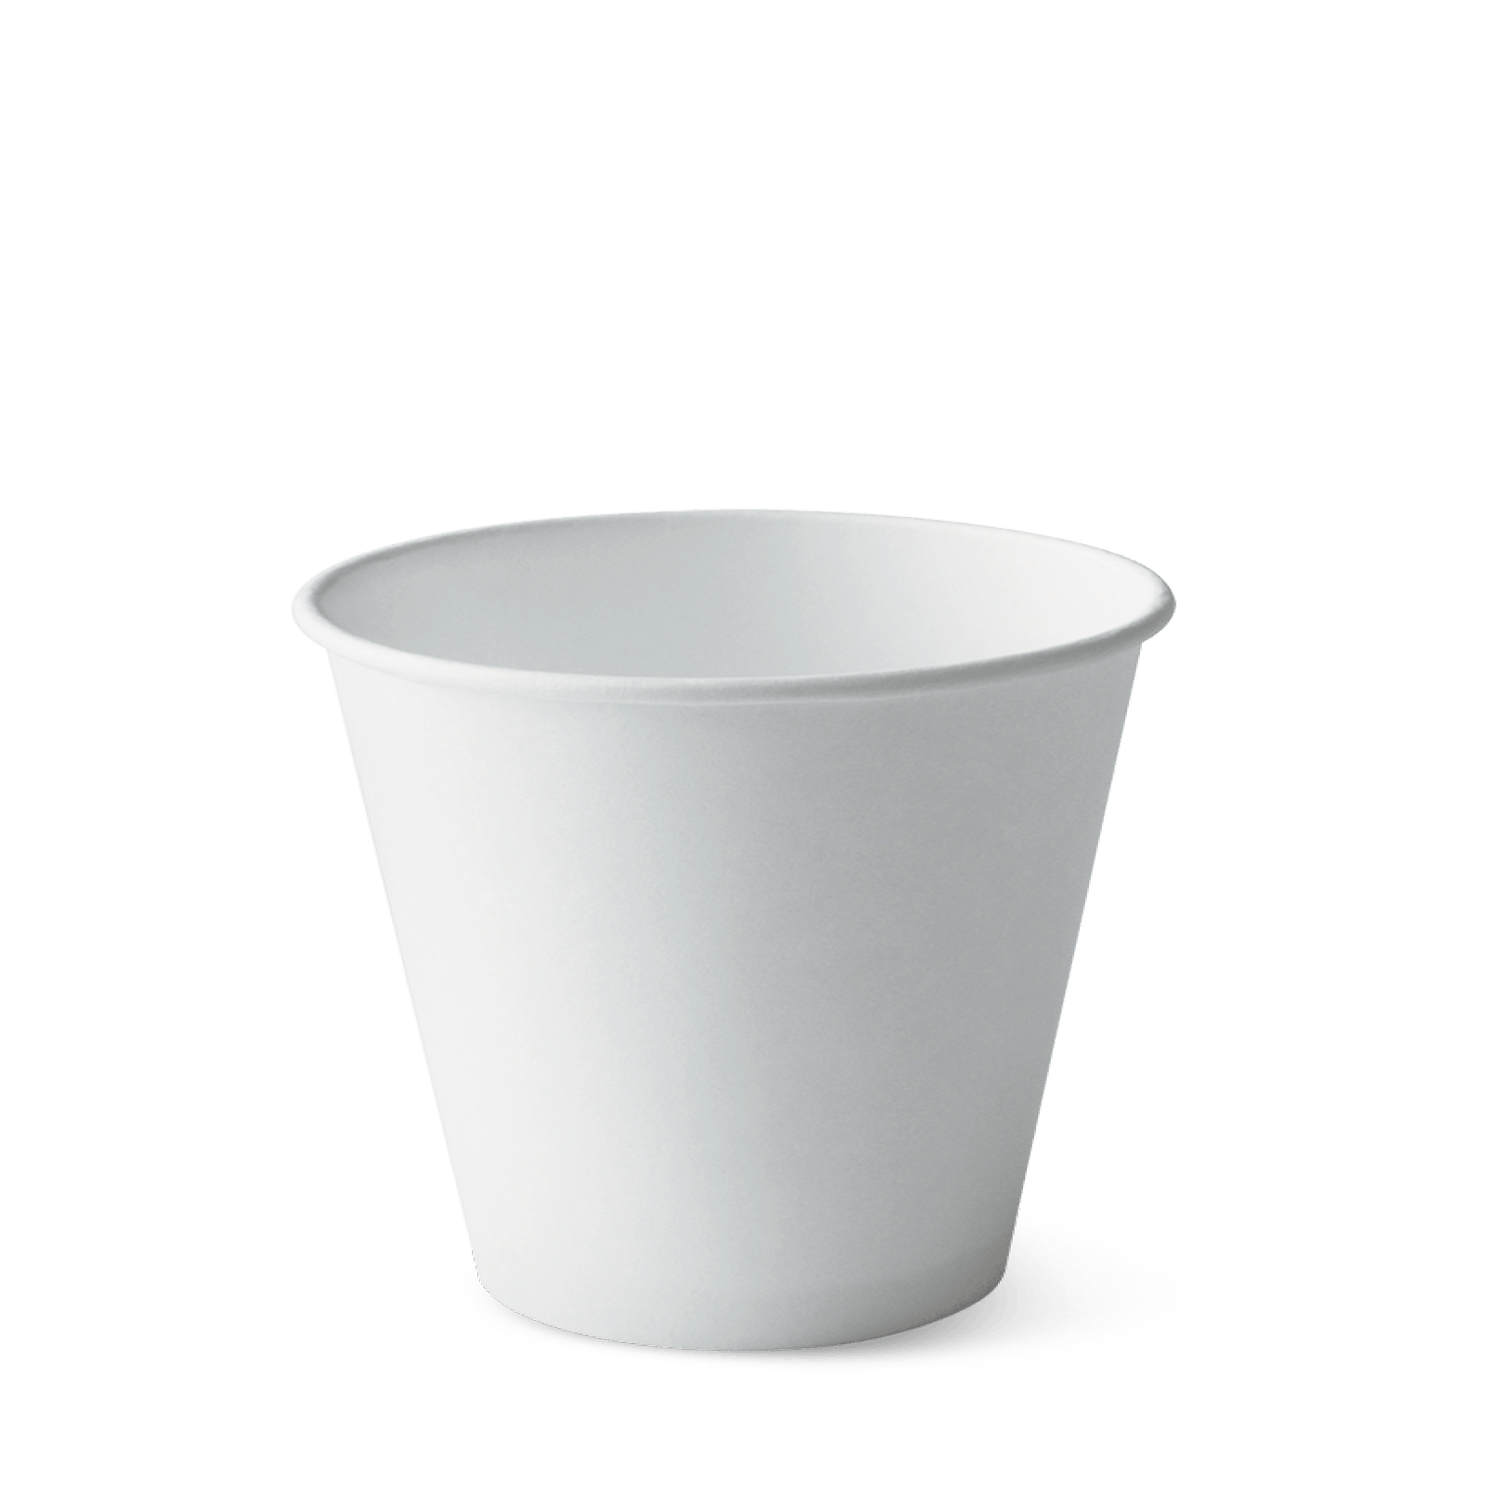 https://www.detpak.com/globalassets/detpak/images/product/cups--cups-accessories/r692s0001_detpak_8oz-squat_single-wall-hot-cup_white.png